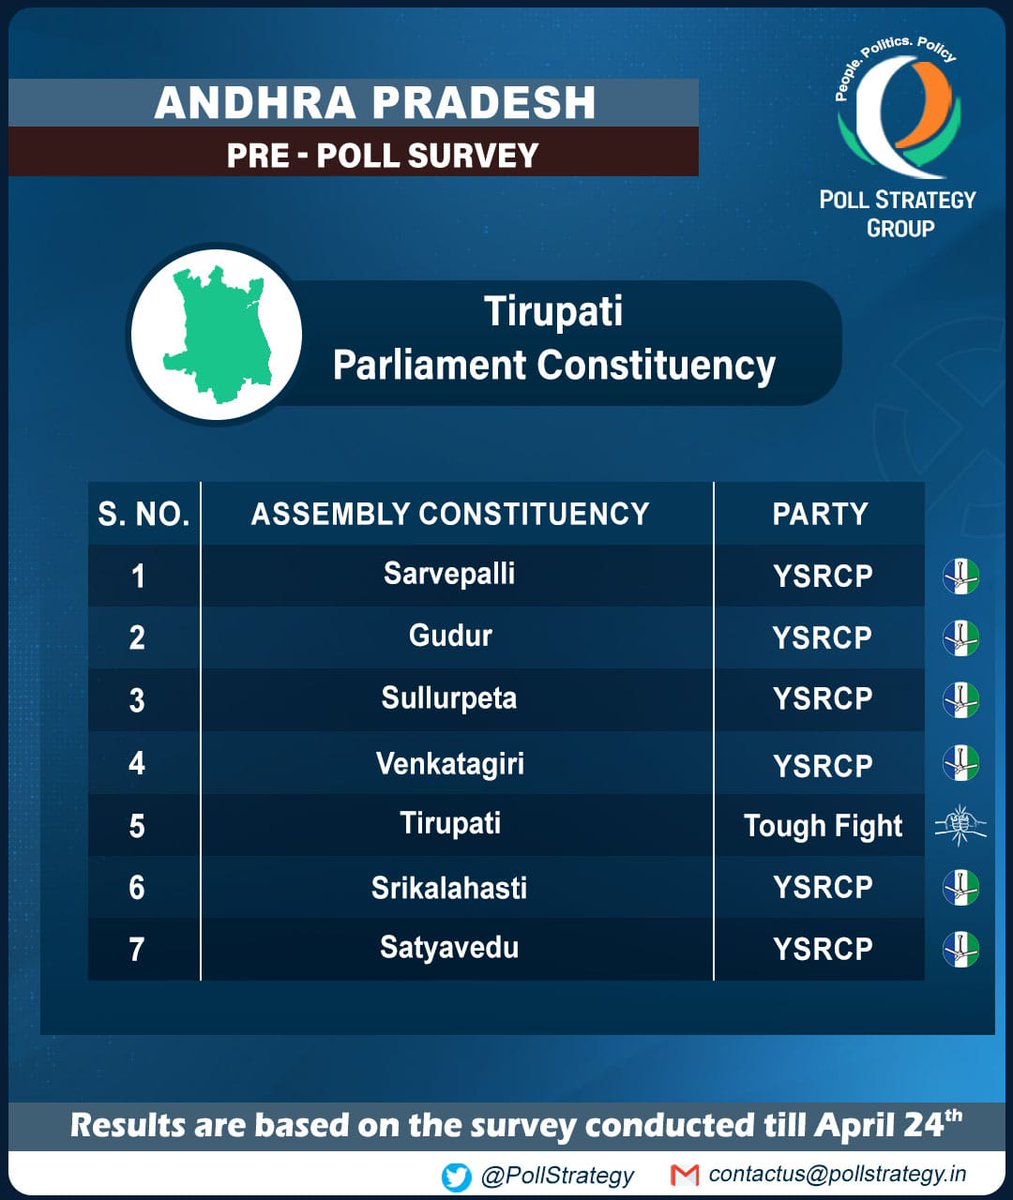 Tirupati Parliament Constituency: Pre-poll prediction 

- YSRCP is winning 6/7 Constituencies from Tirupati PC
- A tough contest will be seen between TDP alliance & YSRCP party in Tirupati AC

#Sarvepalli #Gudur #Sullurpeta #Venkatagiri #Tirupati #Srikalahasti #Satyavedu